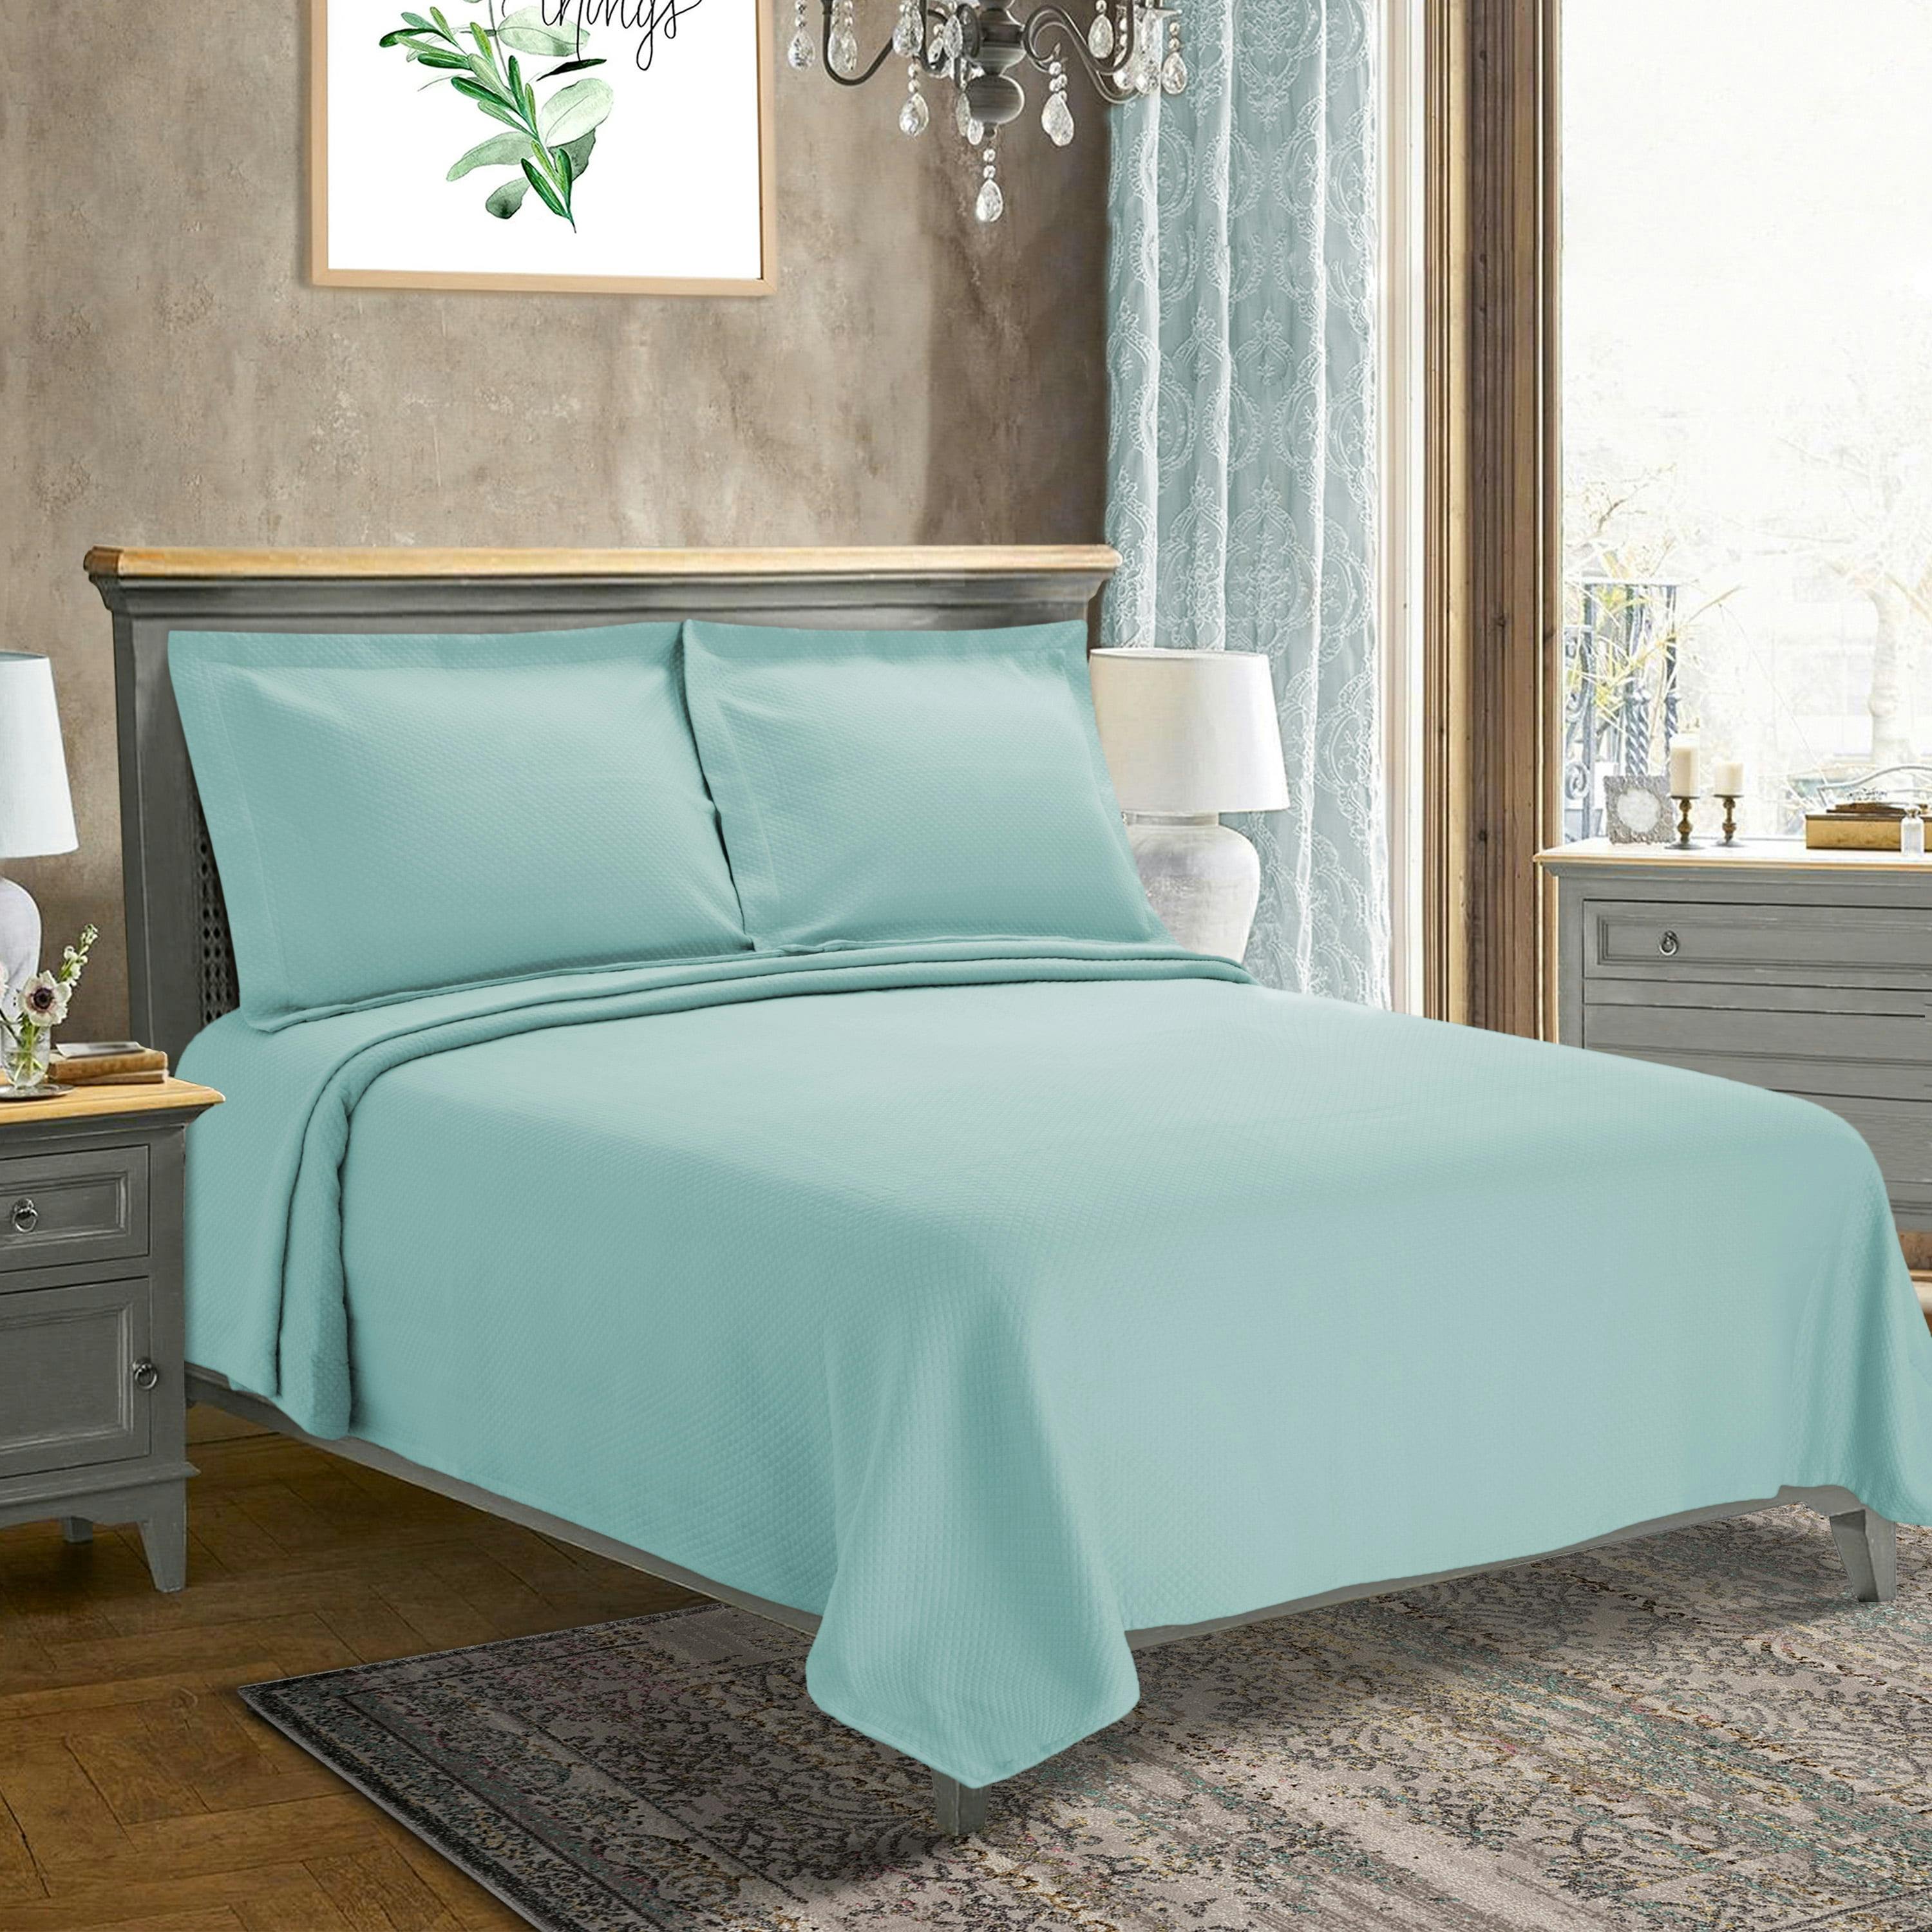 Aqua Cotton Queen Bedspread Set with Reversible Lattice Pattern